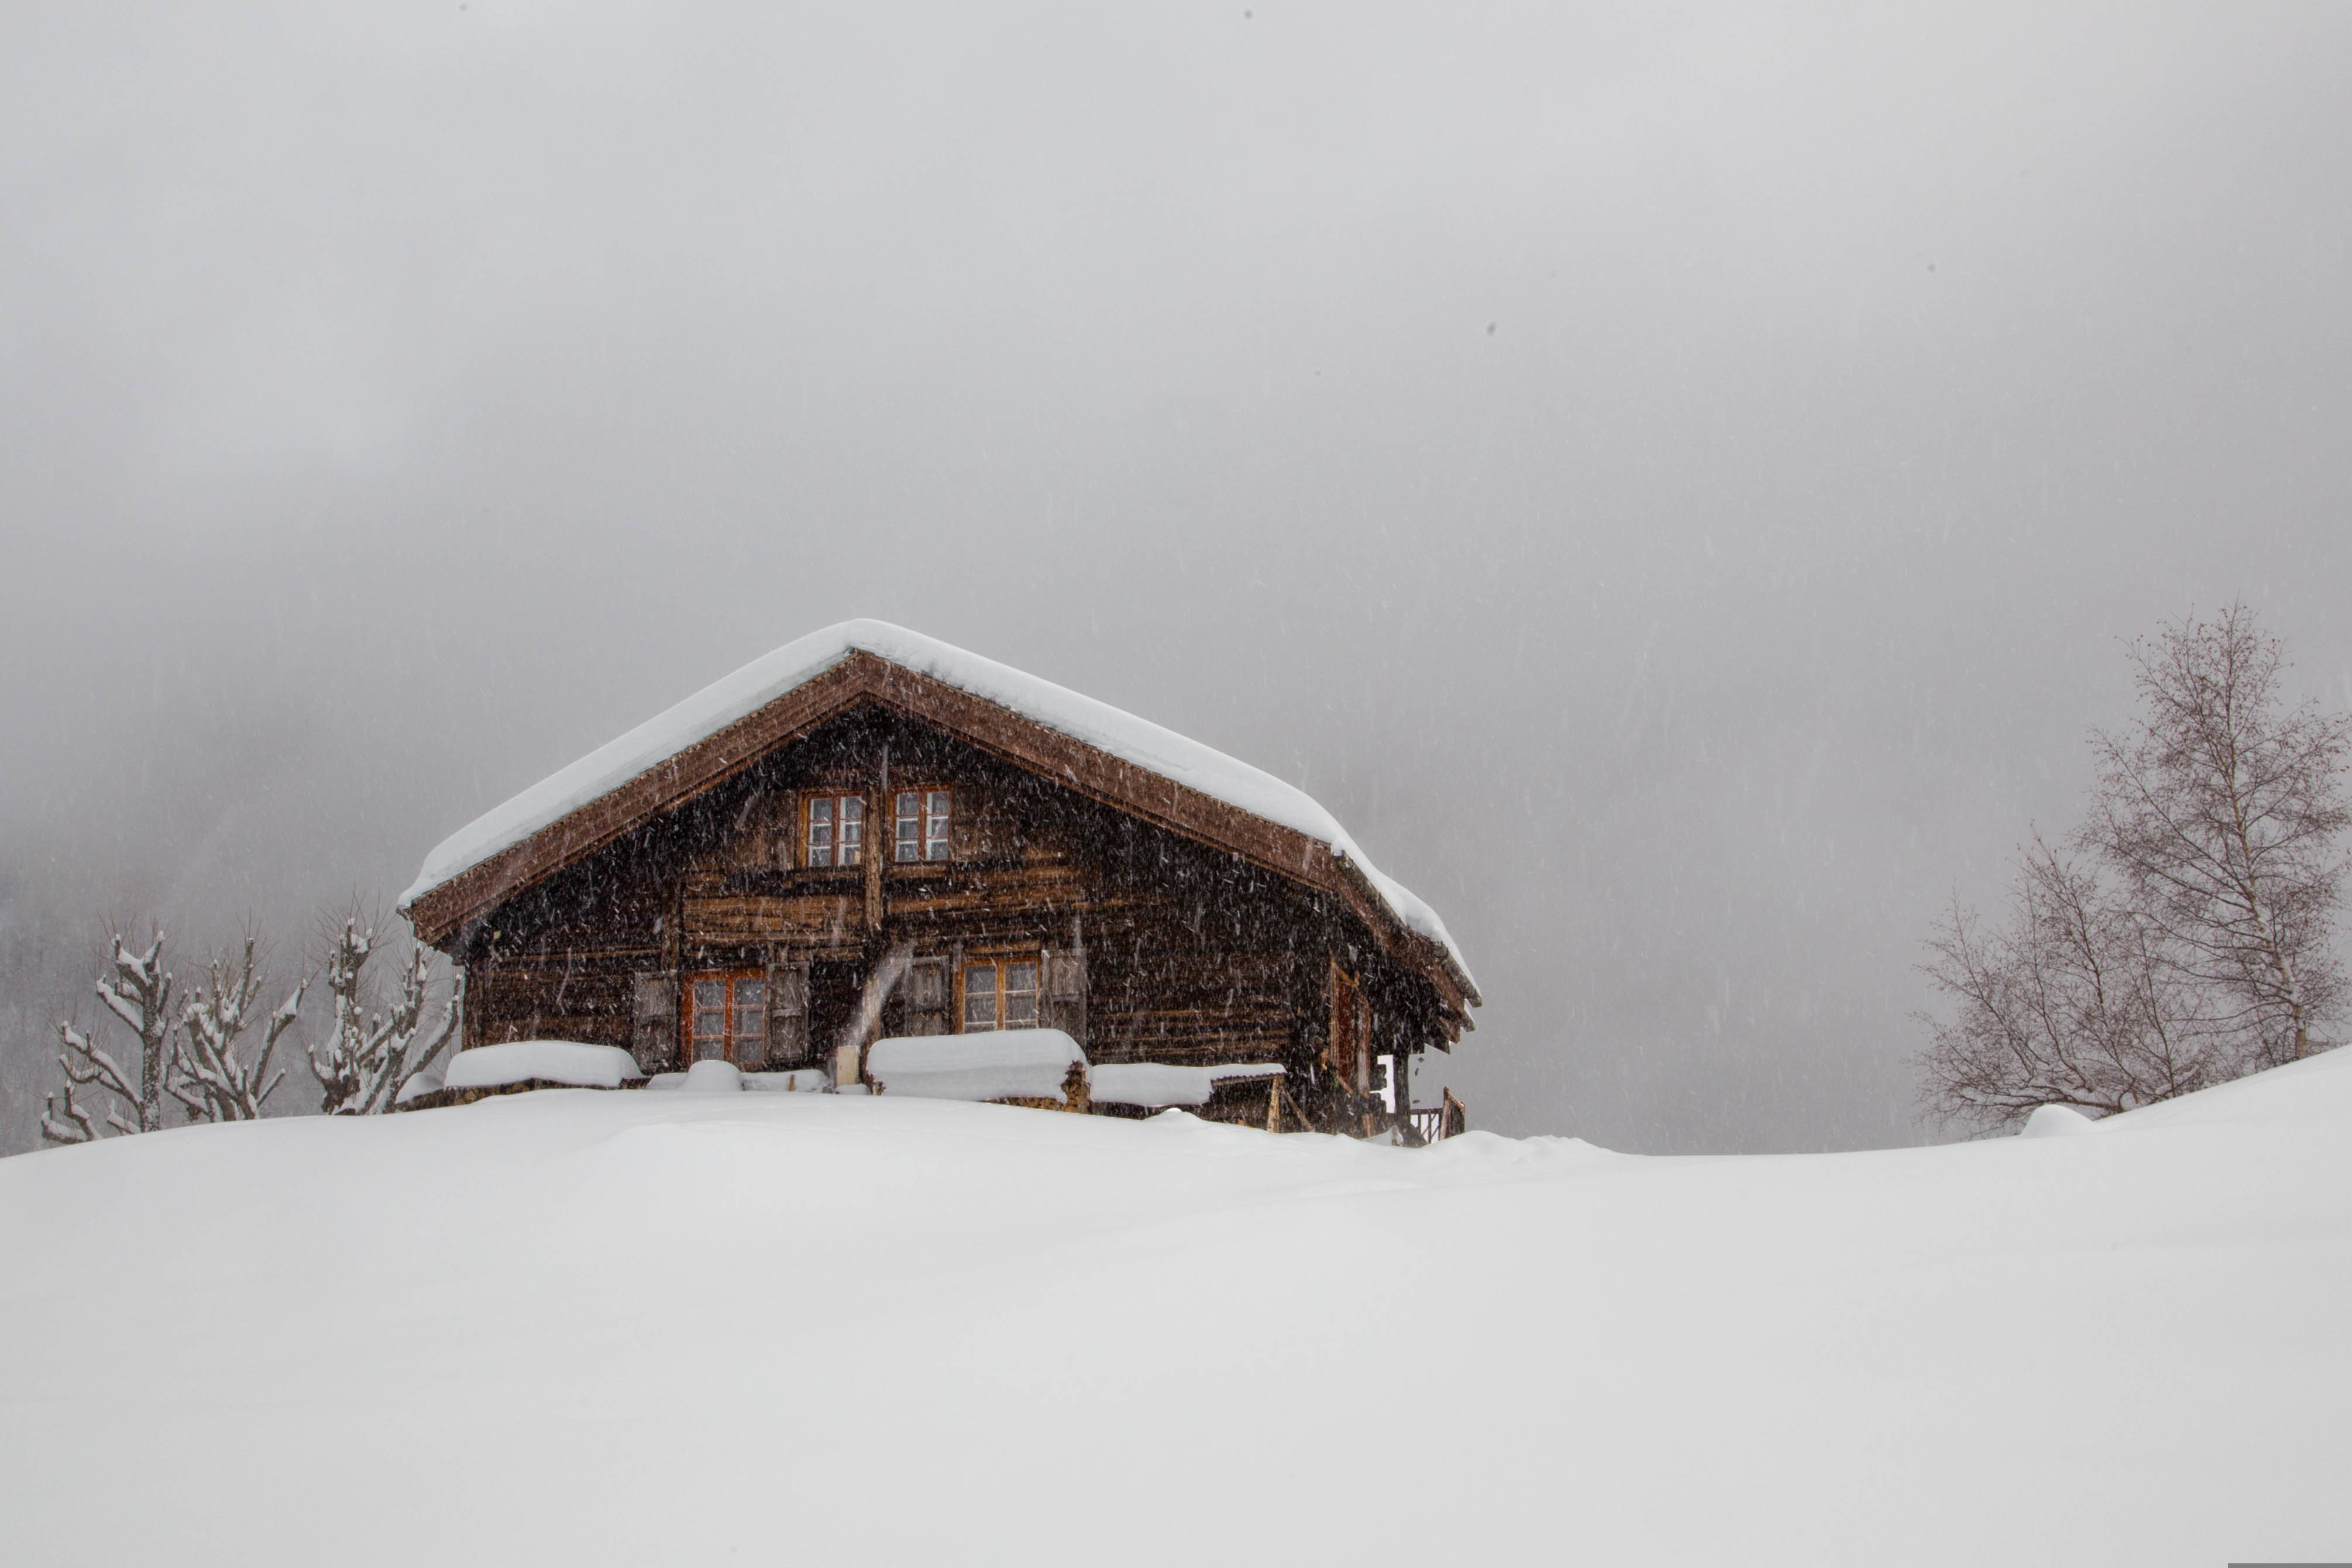 General 4020x2680 landscape snow winter house snowing overcast